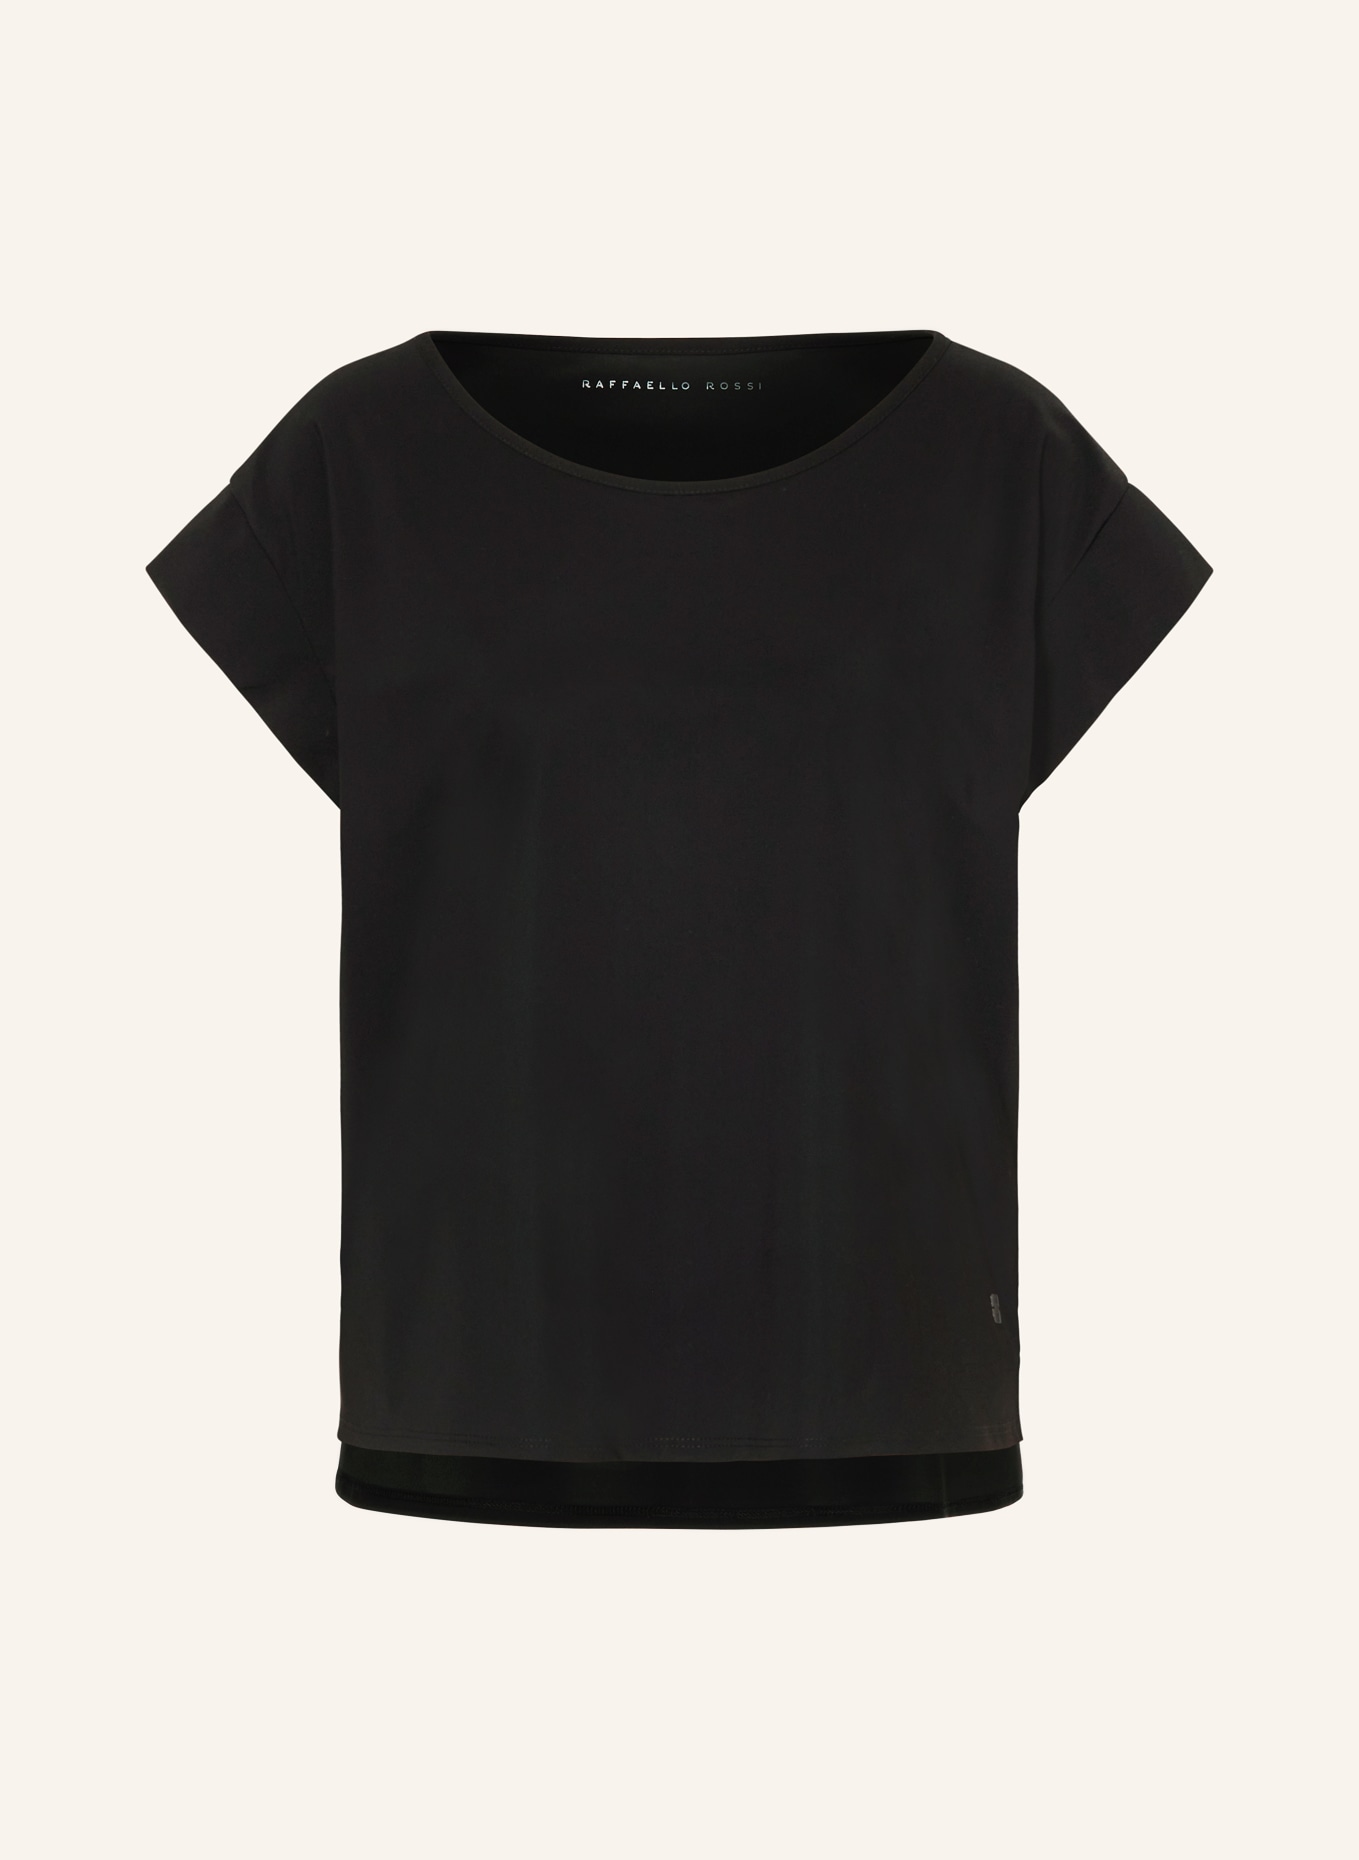 RAFFAELLO ROSSI T-Shirt GRIT, Farbe: SCHWARZ (Bild 1)